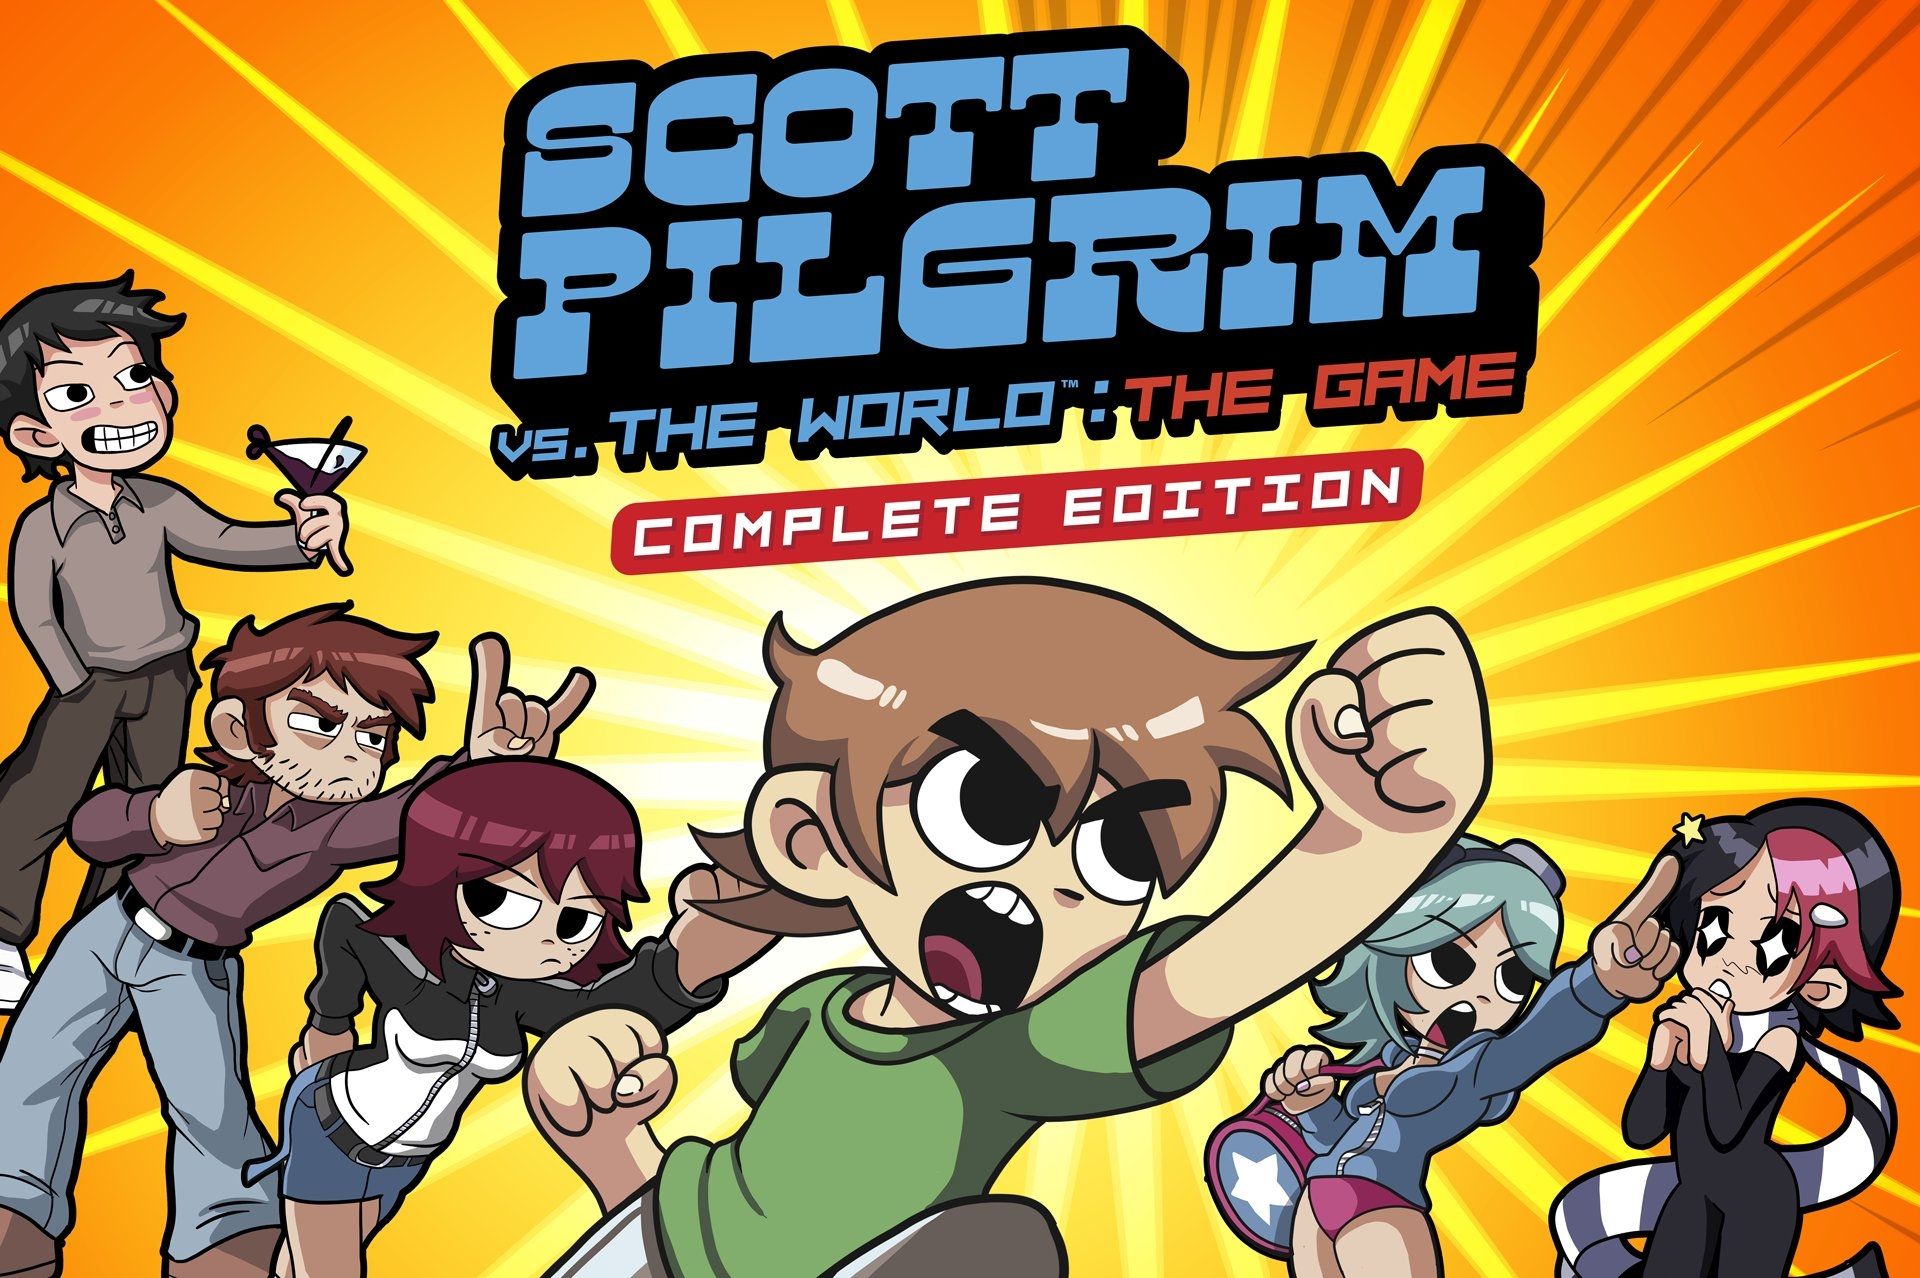 Scott Pilgrim vs. The World: The Game Complete Edition, Ubisoft